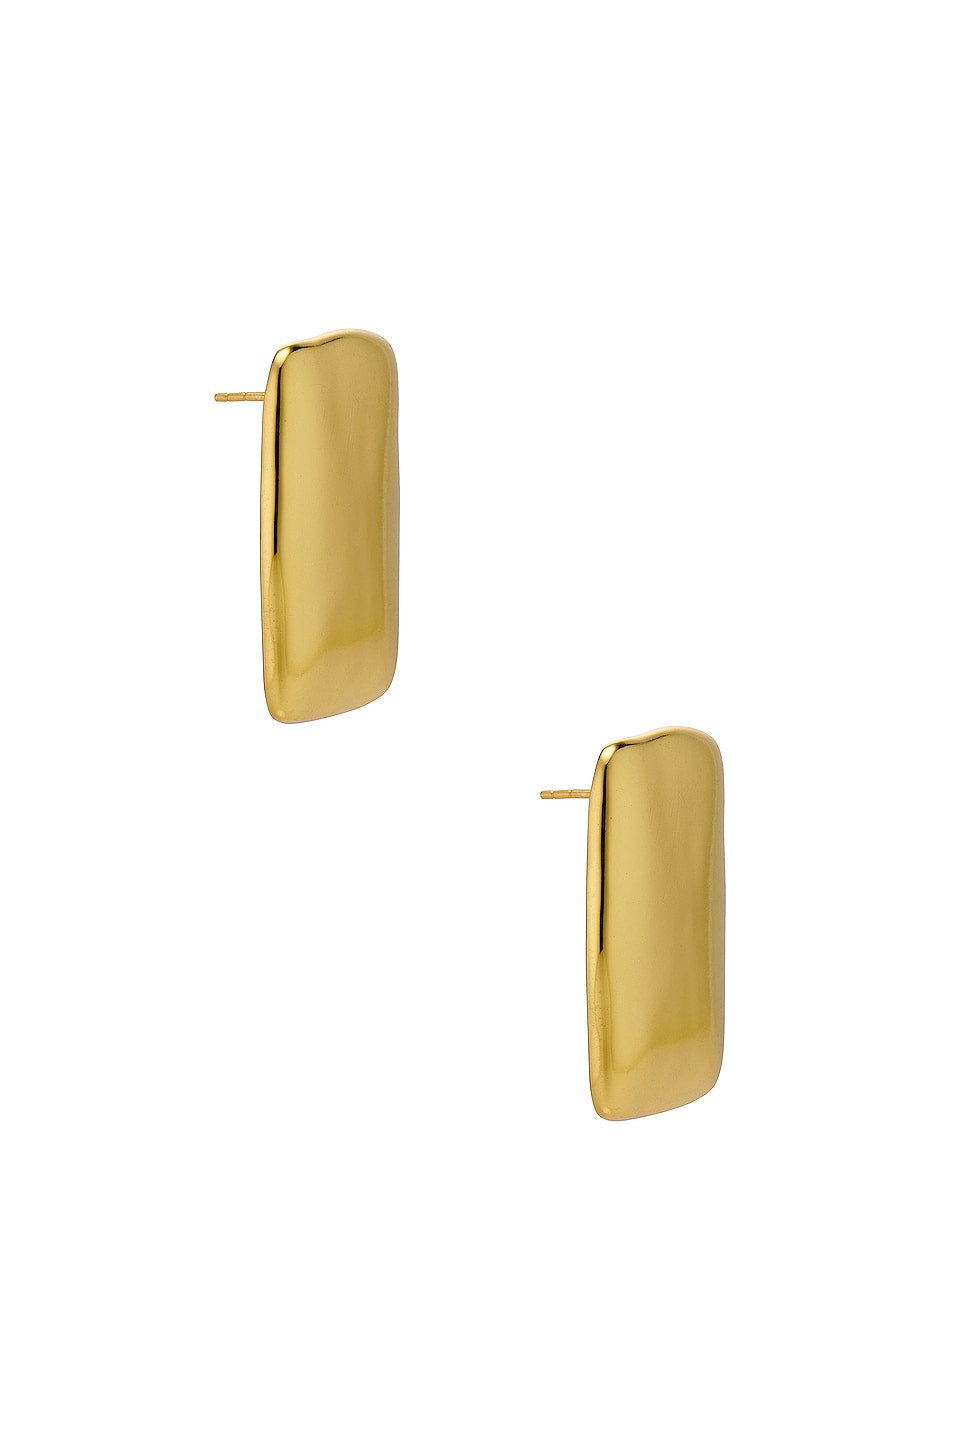 AUREUM Cait Earrings in 24k Gold Vermeil Size All